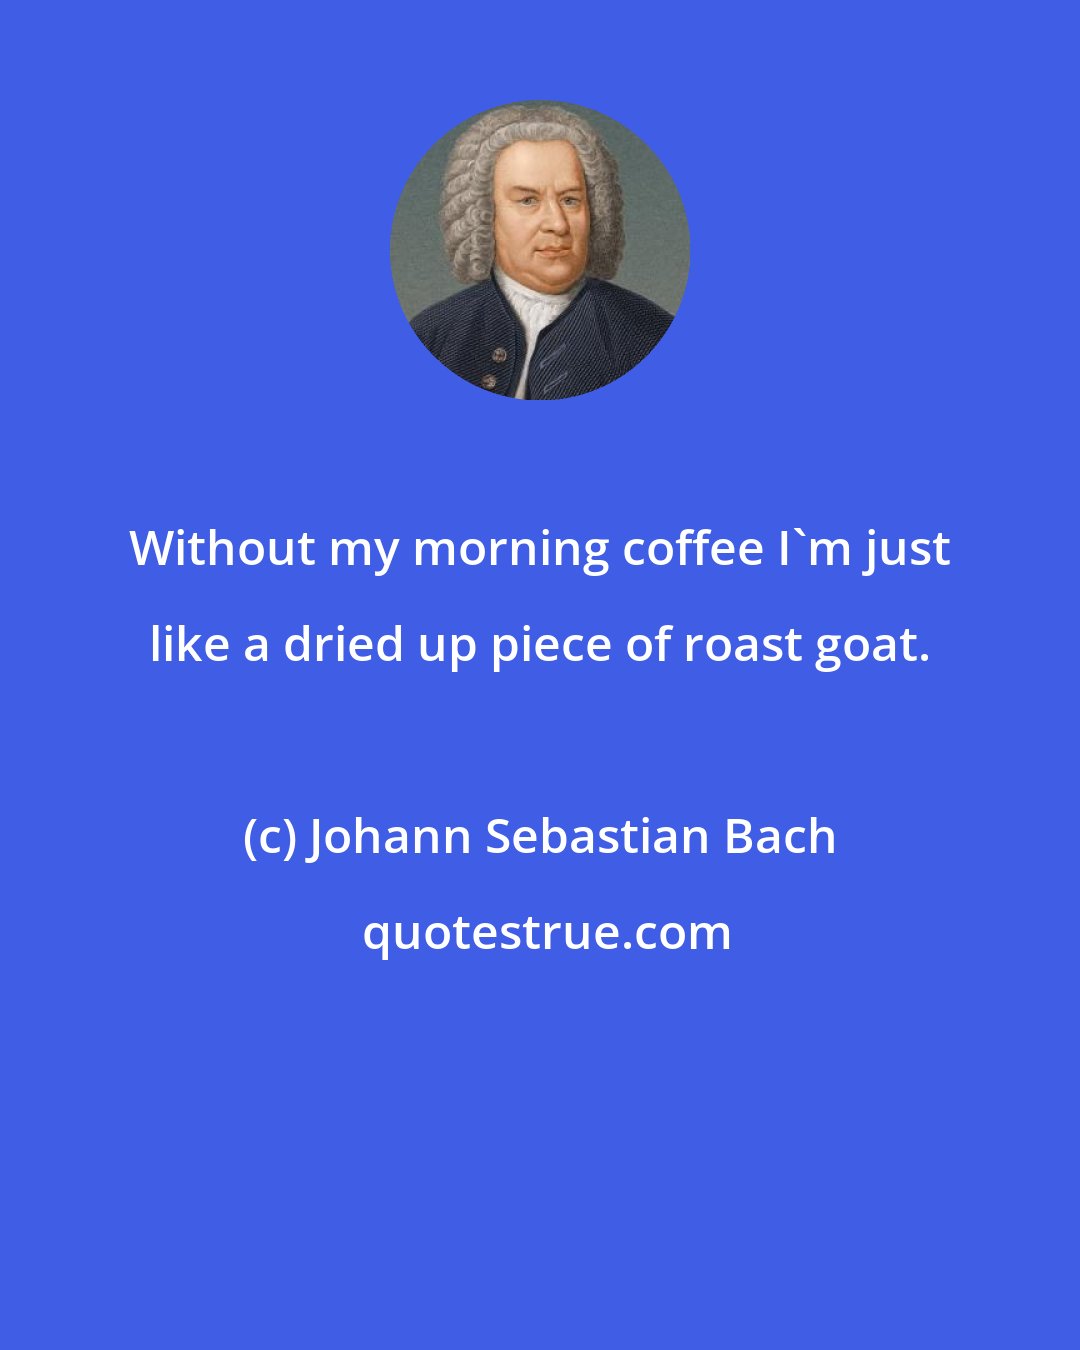 Johann Sebastian Bach: Without my morning coffee I'm just like a dried up piece of roast goat.